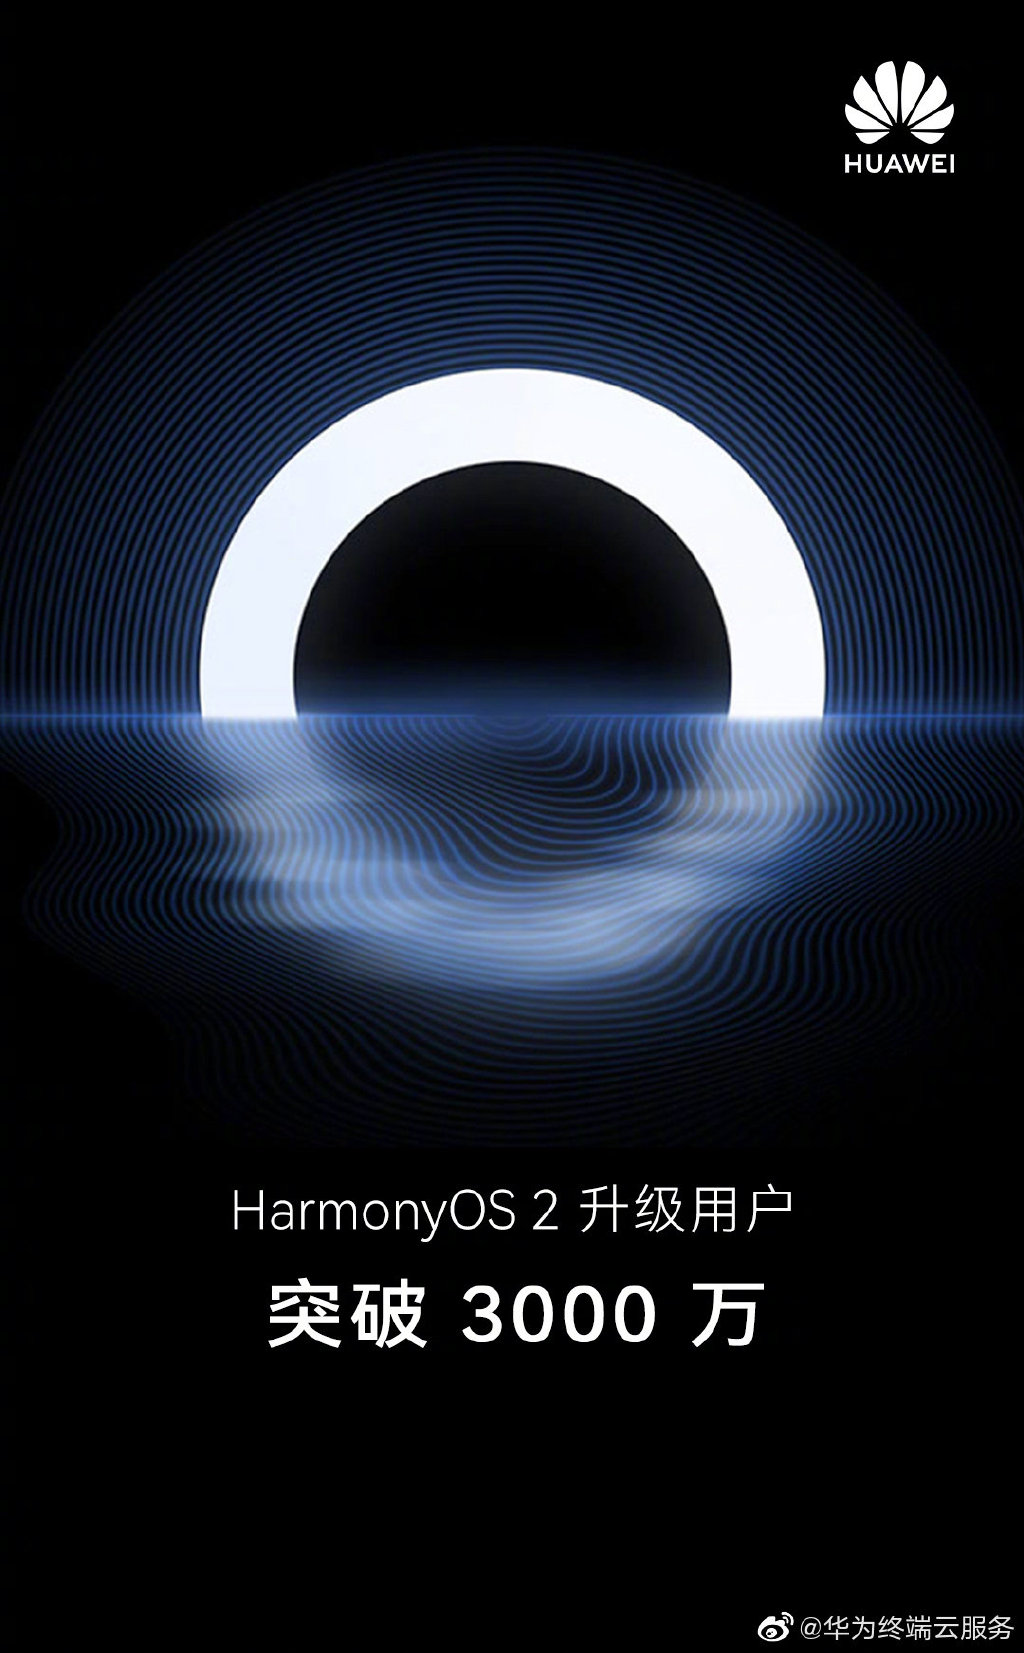 HarmonyOS 2升级用户突破3000万